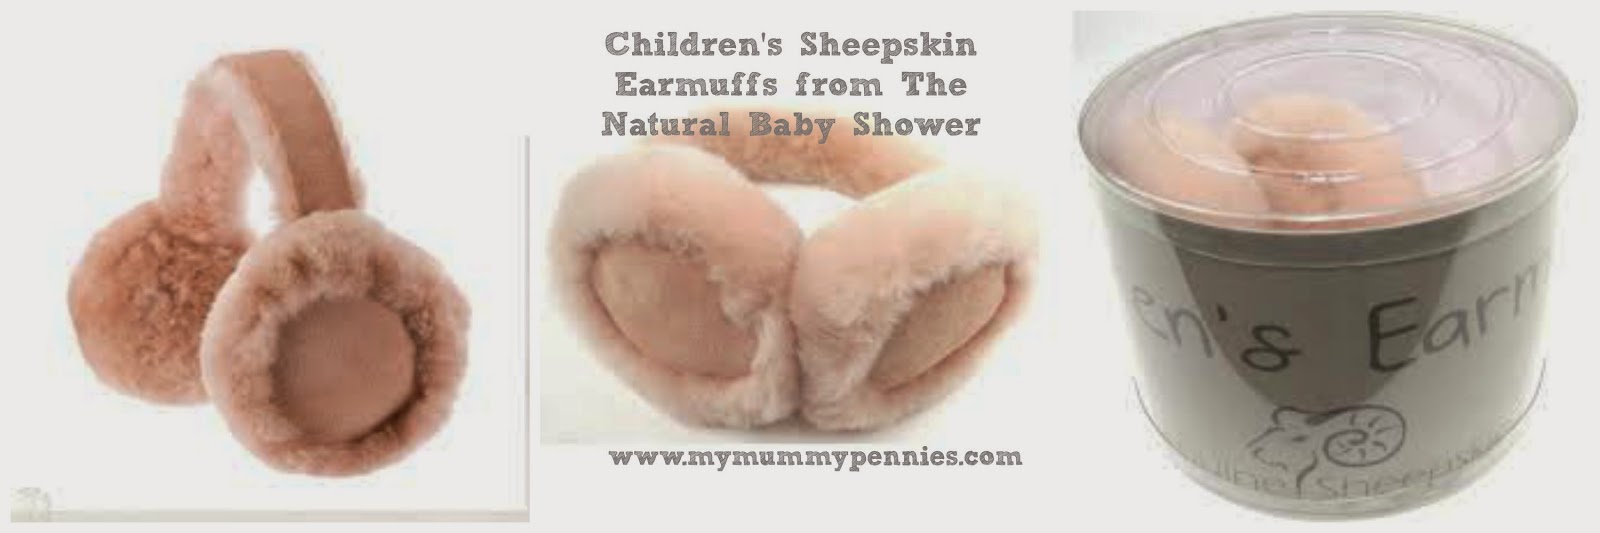 Children's Sheepskin Earmuffs from The Natural Baby Shower